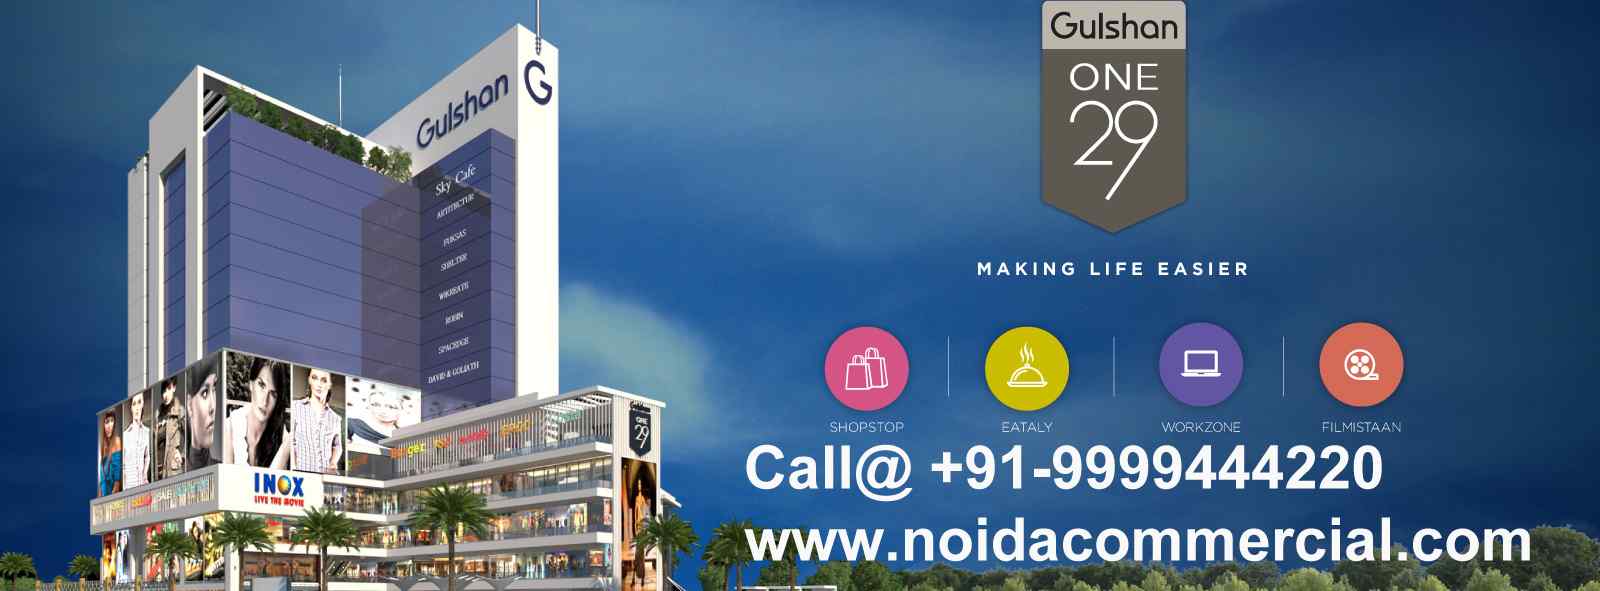 Gulshan 129 Noida Expressway Commercial Shops Price